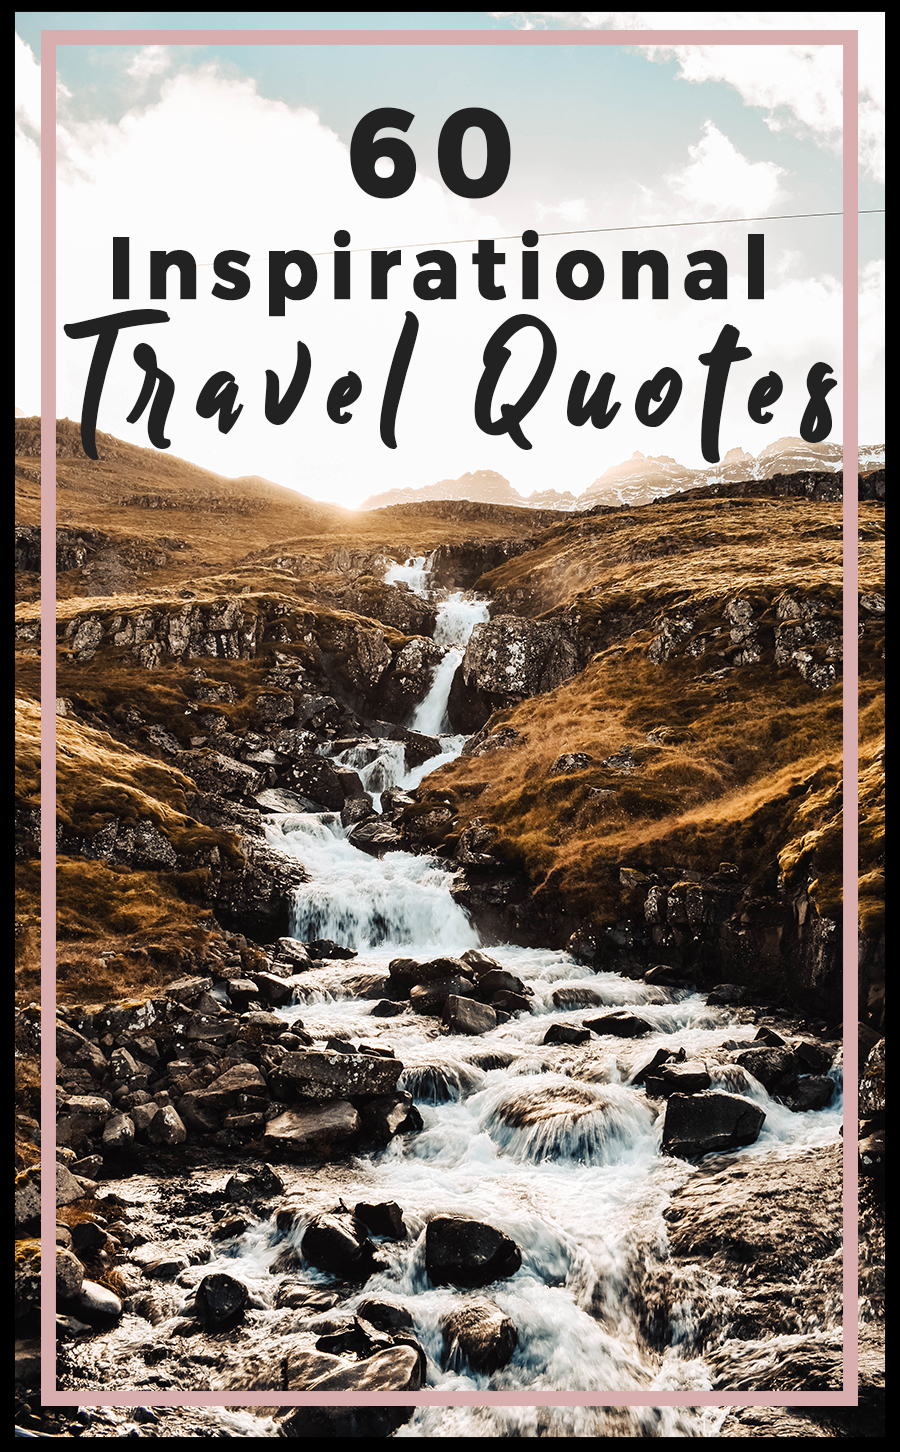 Best Inspirational Travel Quotes - Helene in Between